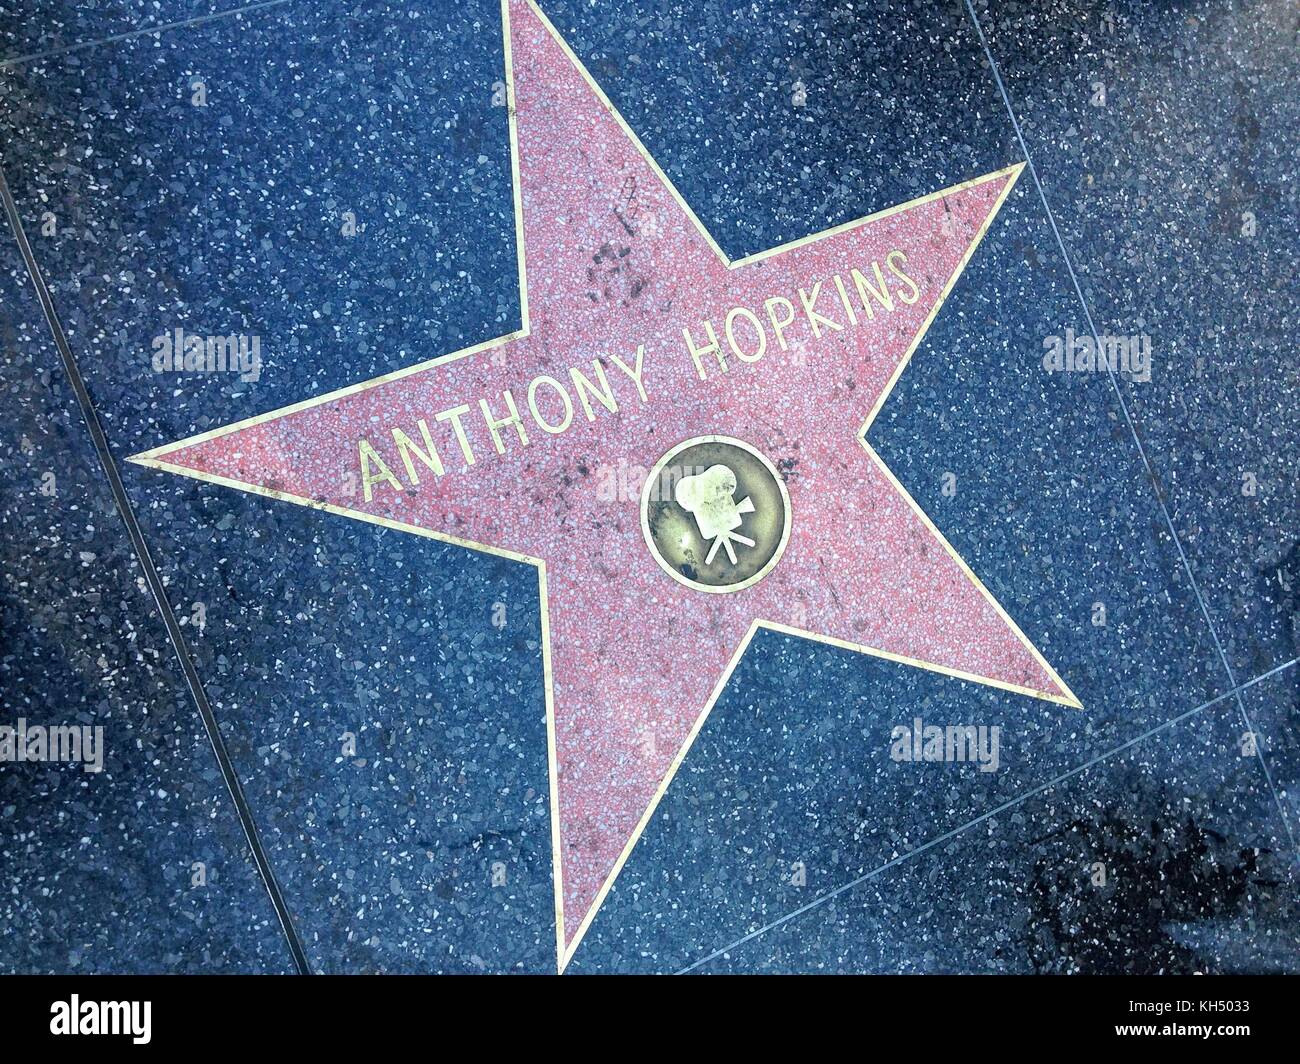 Hollywood, Kalifornien - 26. Juli 2017: Anthony Hopkins Hollywood Walk of Fame Star am 26. Juli 2017 in Hollywood, CA. Die meisten berühmten Rolle als cannib Stockfoto